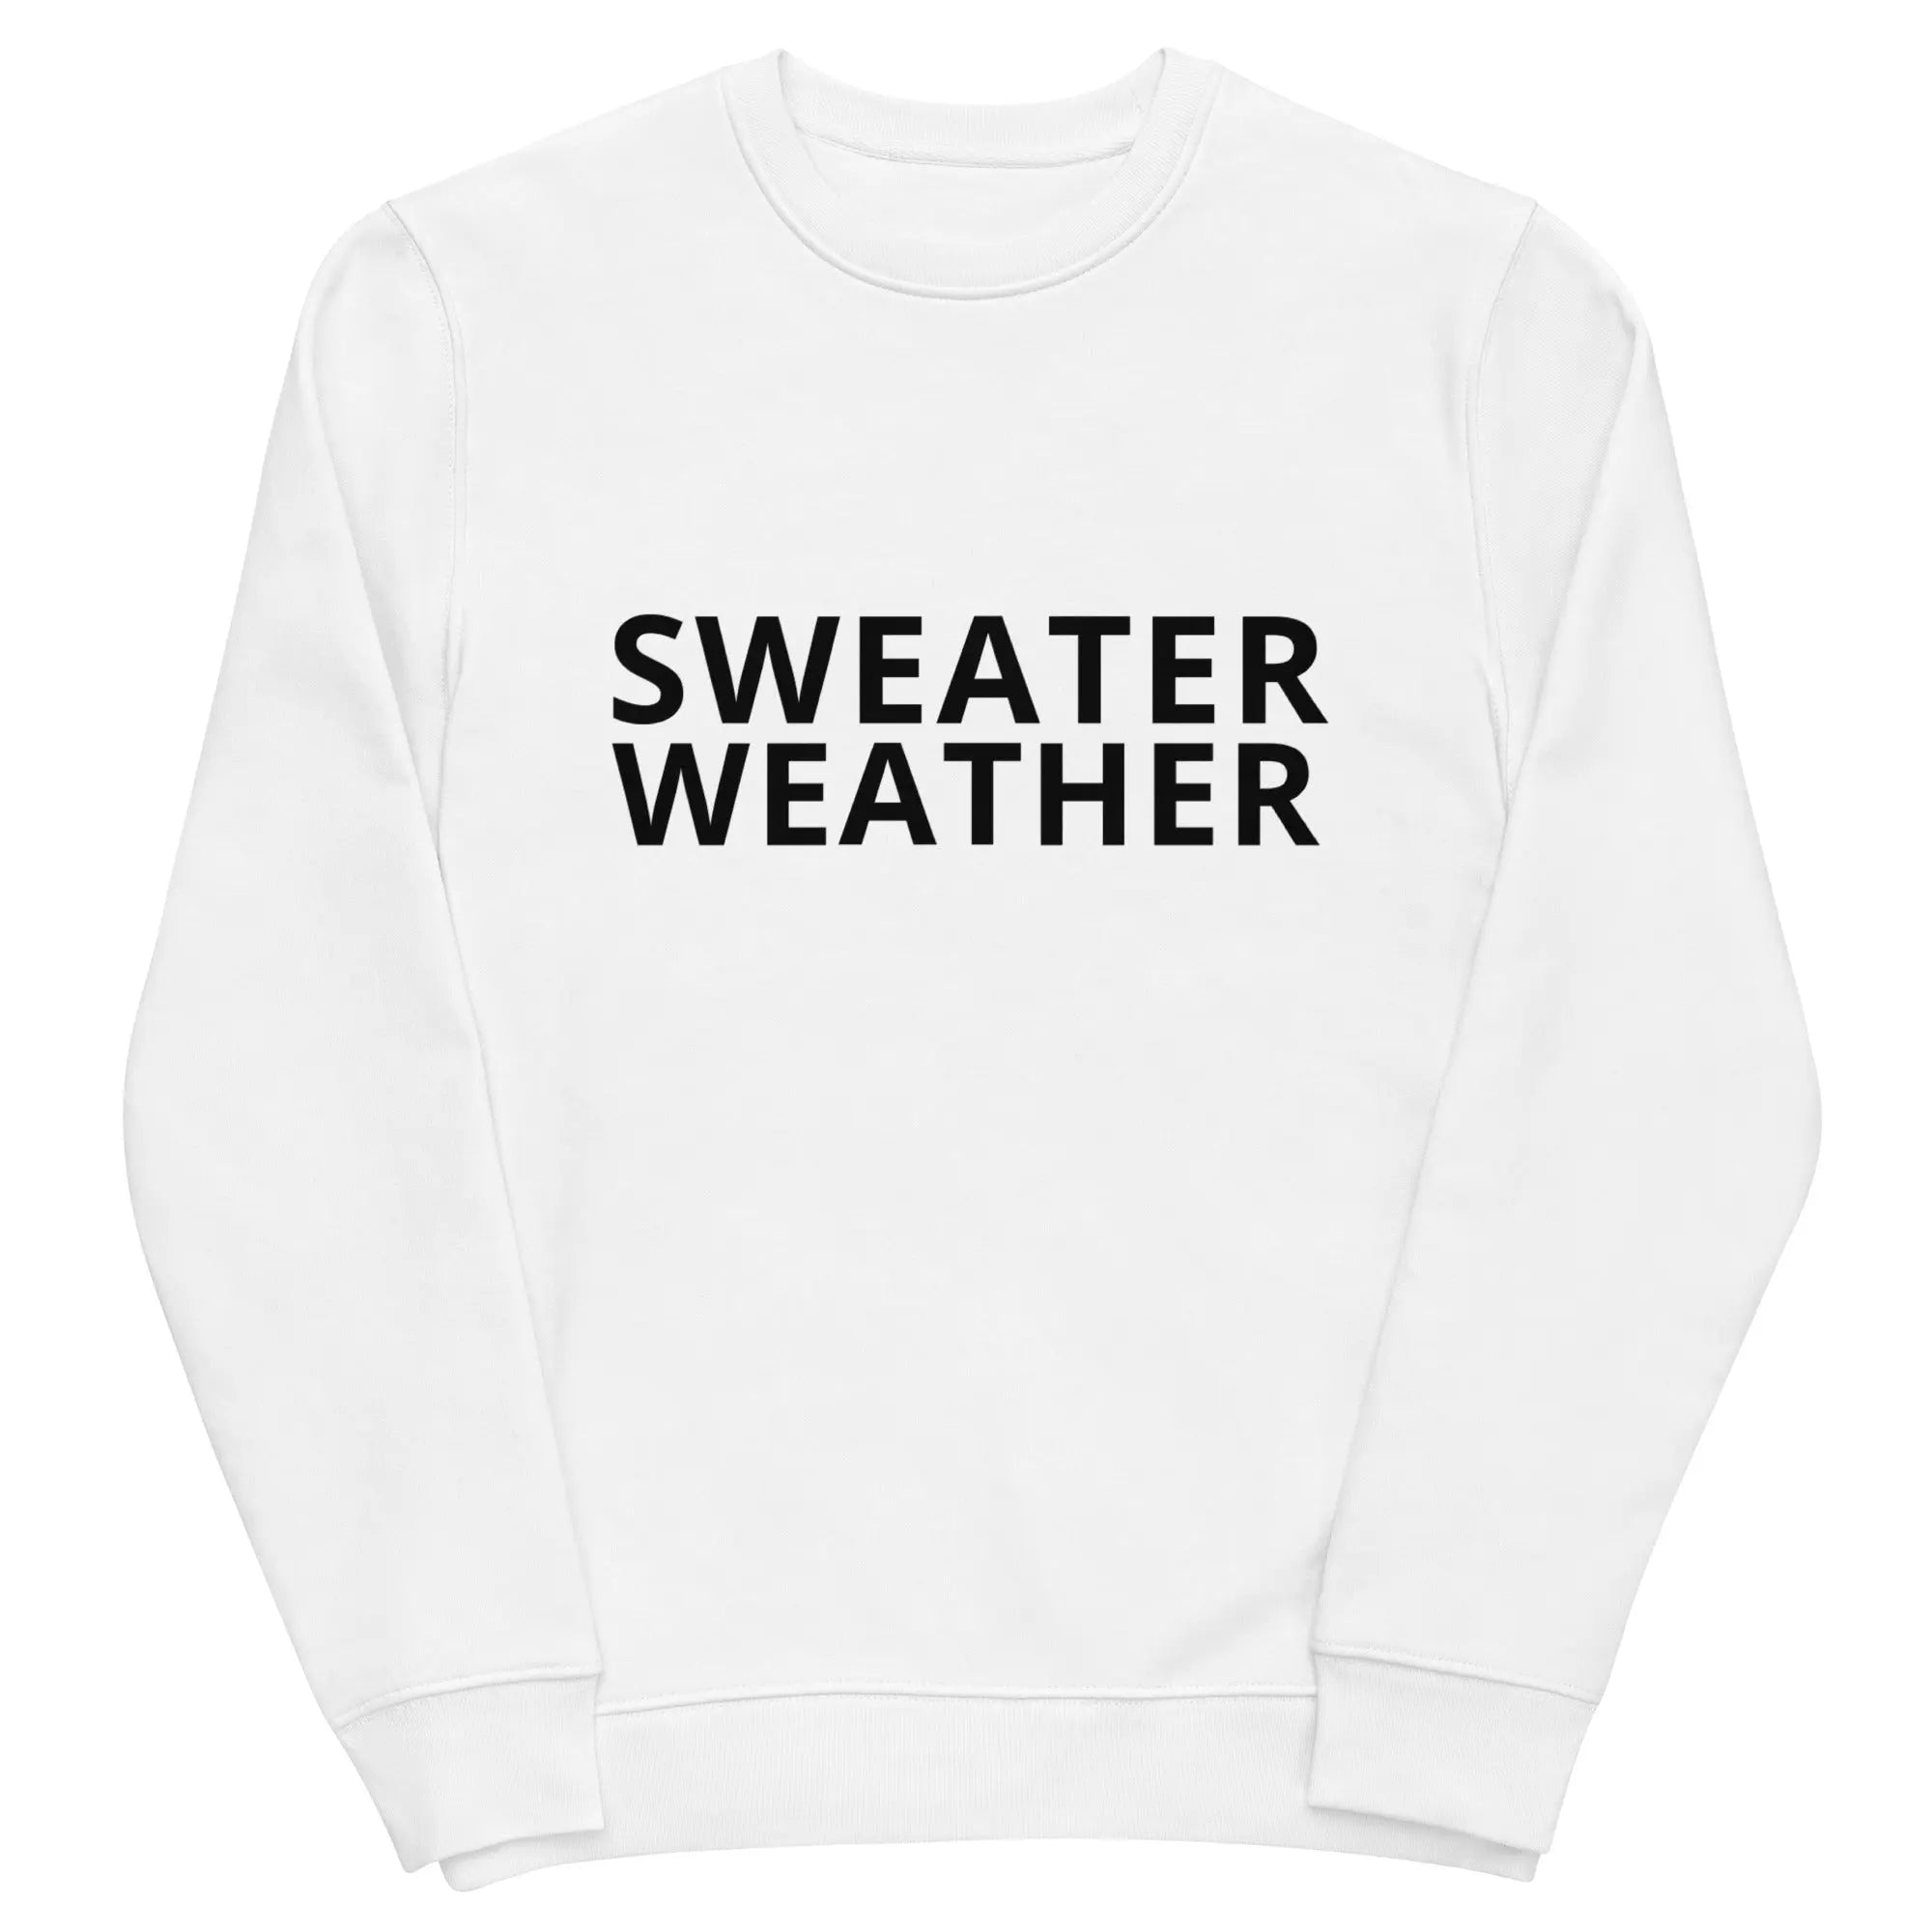 Sweater weather men's woman's white sweatshirt